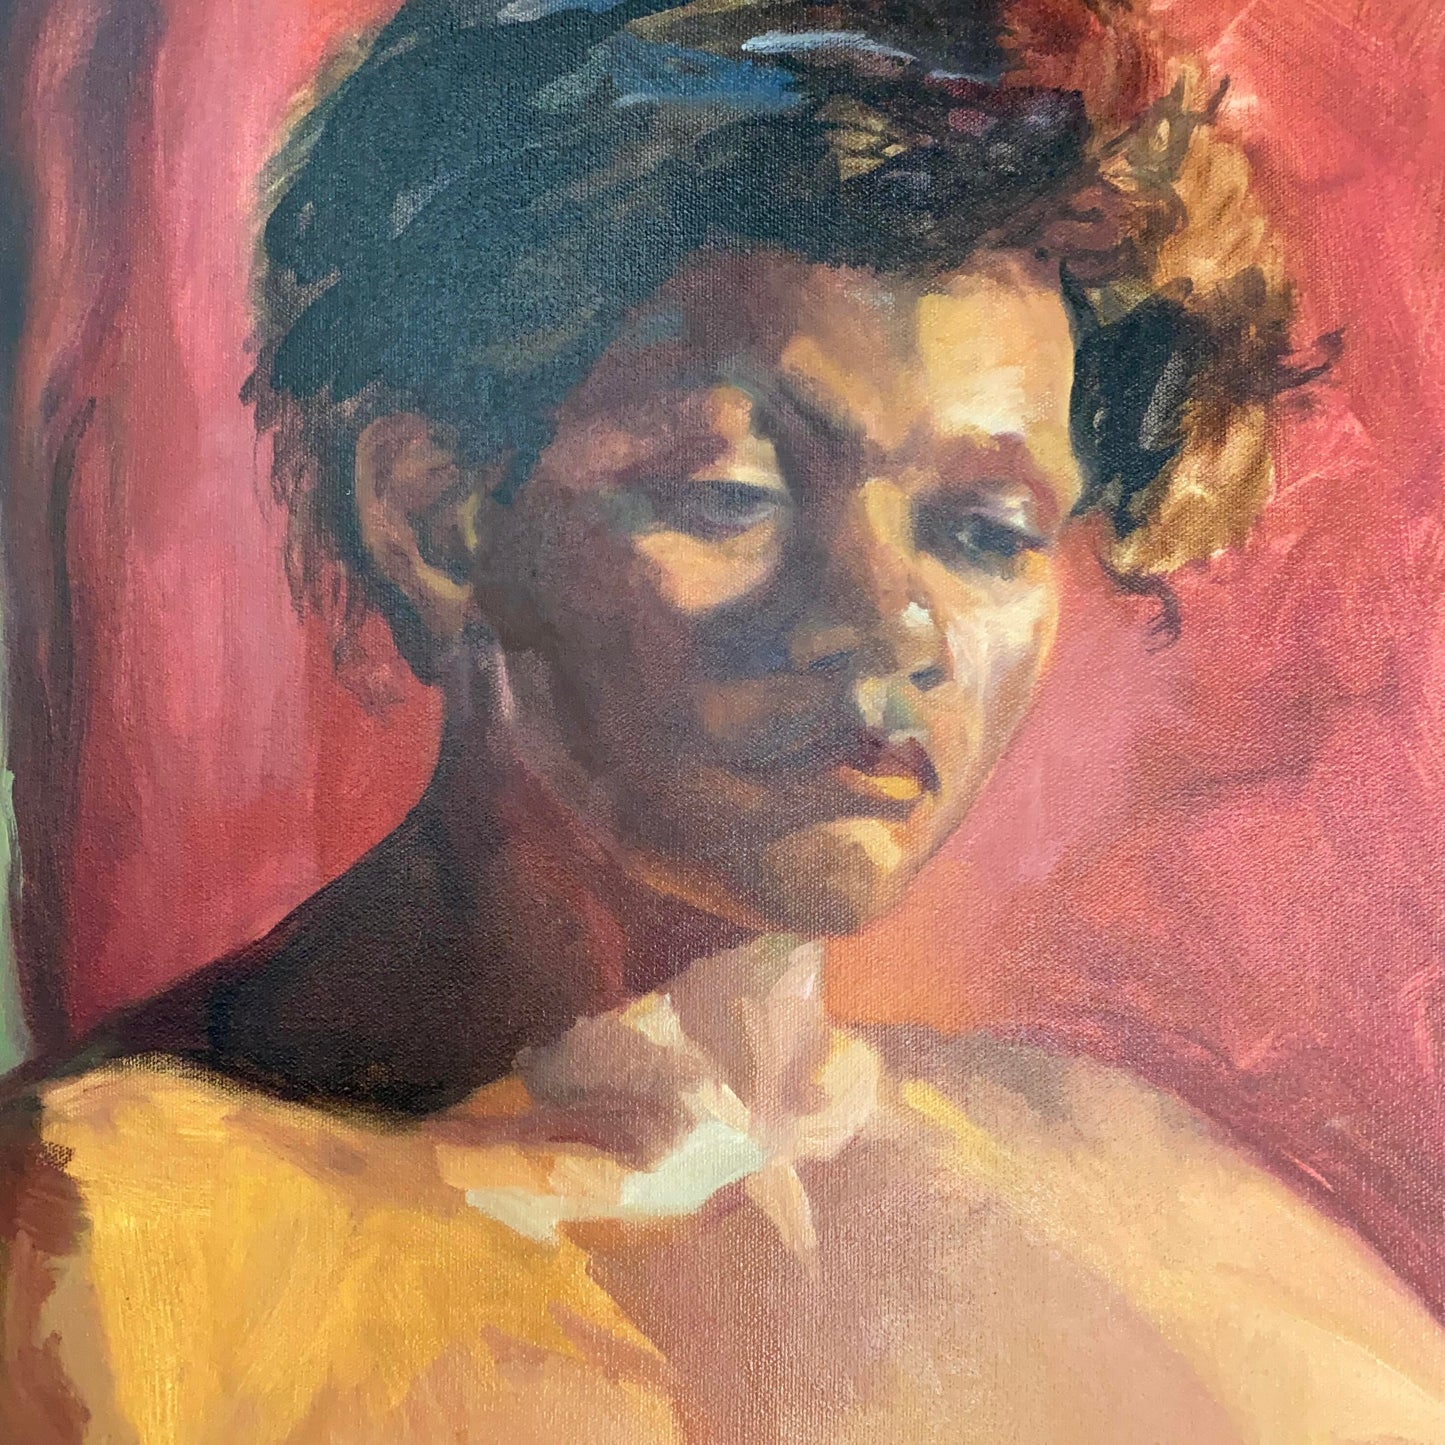 1986 Oil on Canvas by Linda Kolar Titled "Kiki"